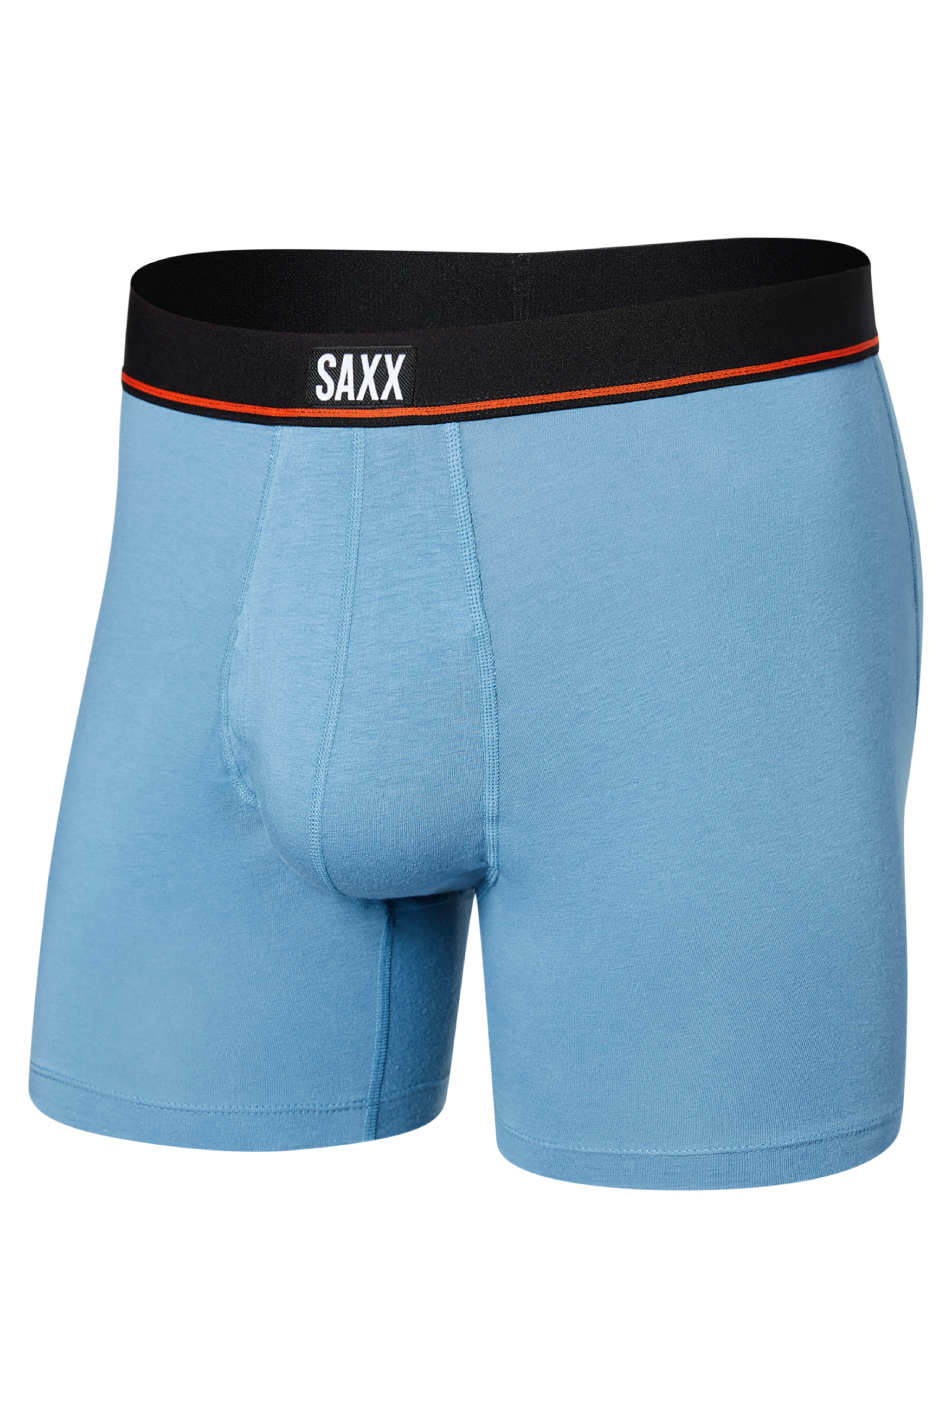 SAXX Non-Stop Stretch Men's Cotton Boxer Brief